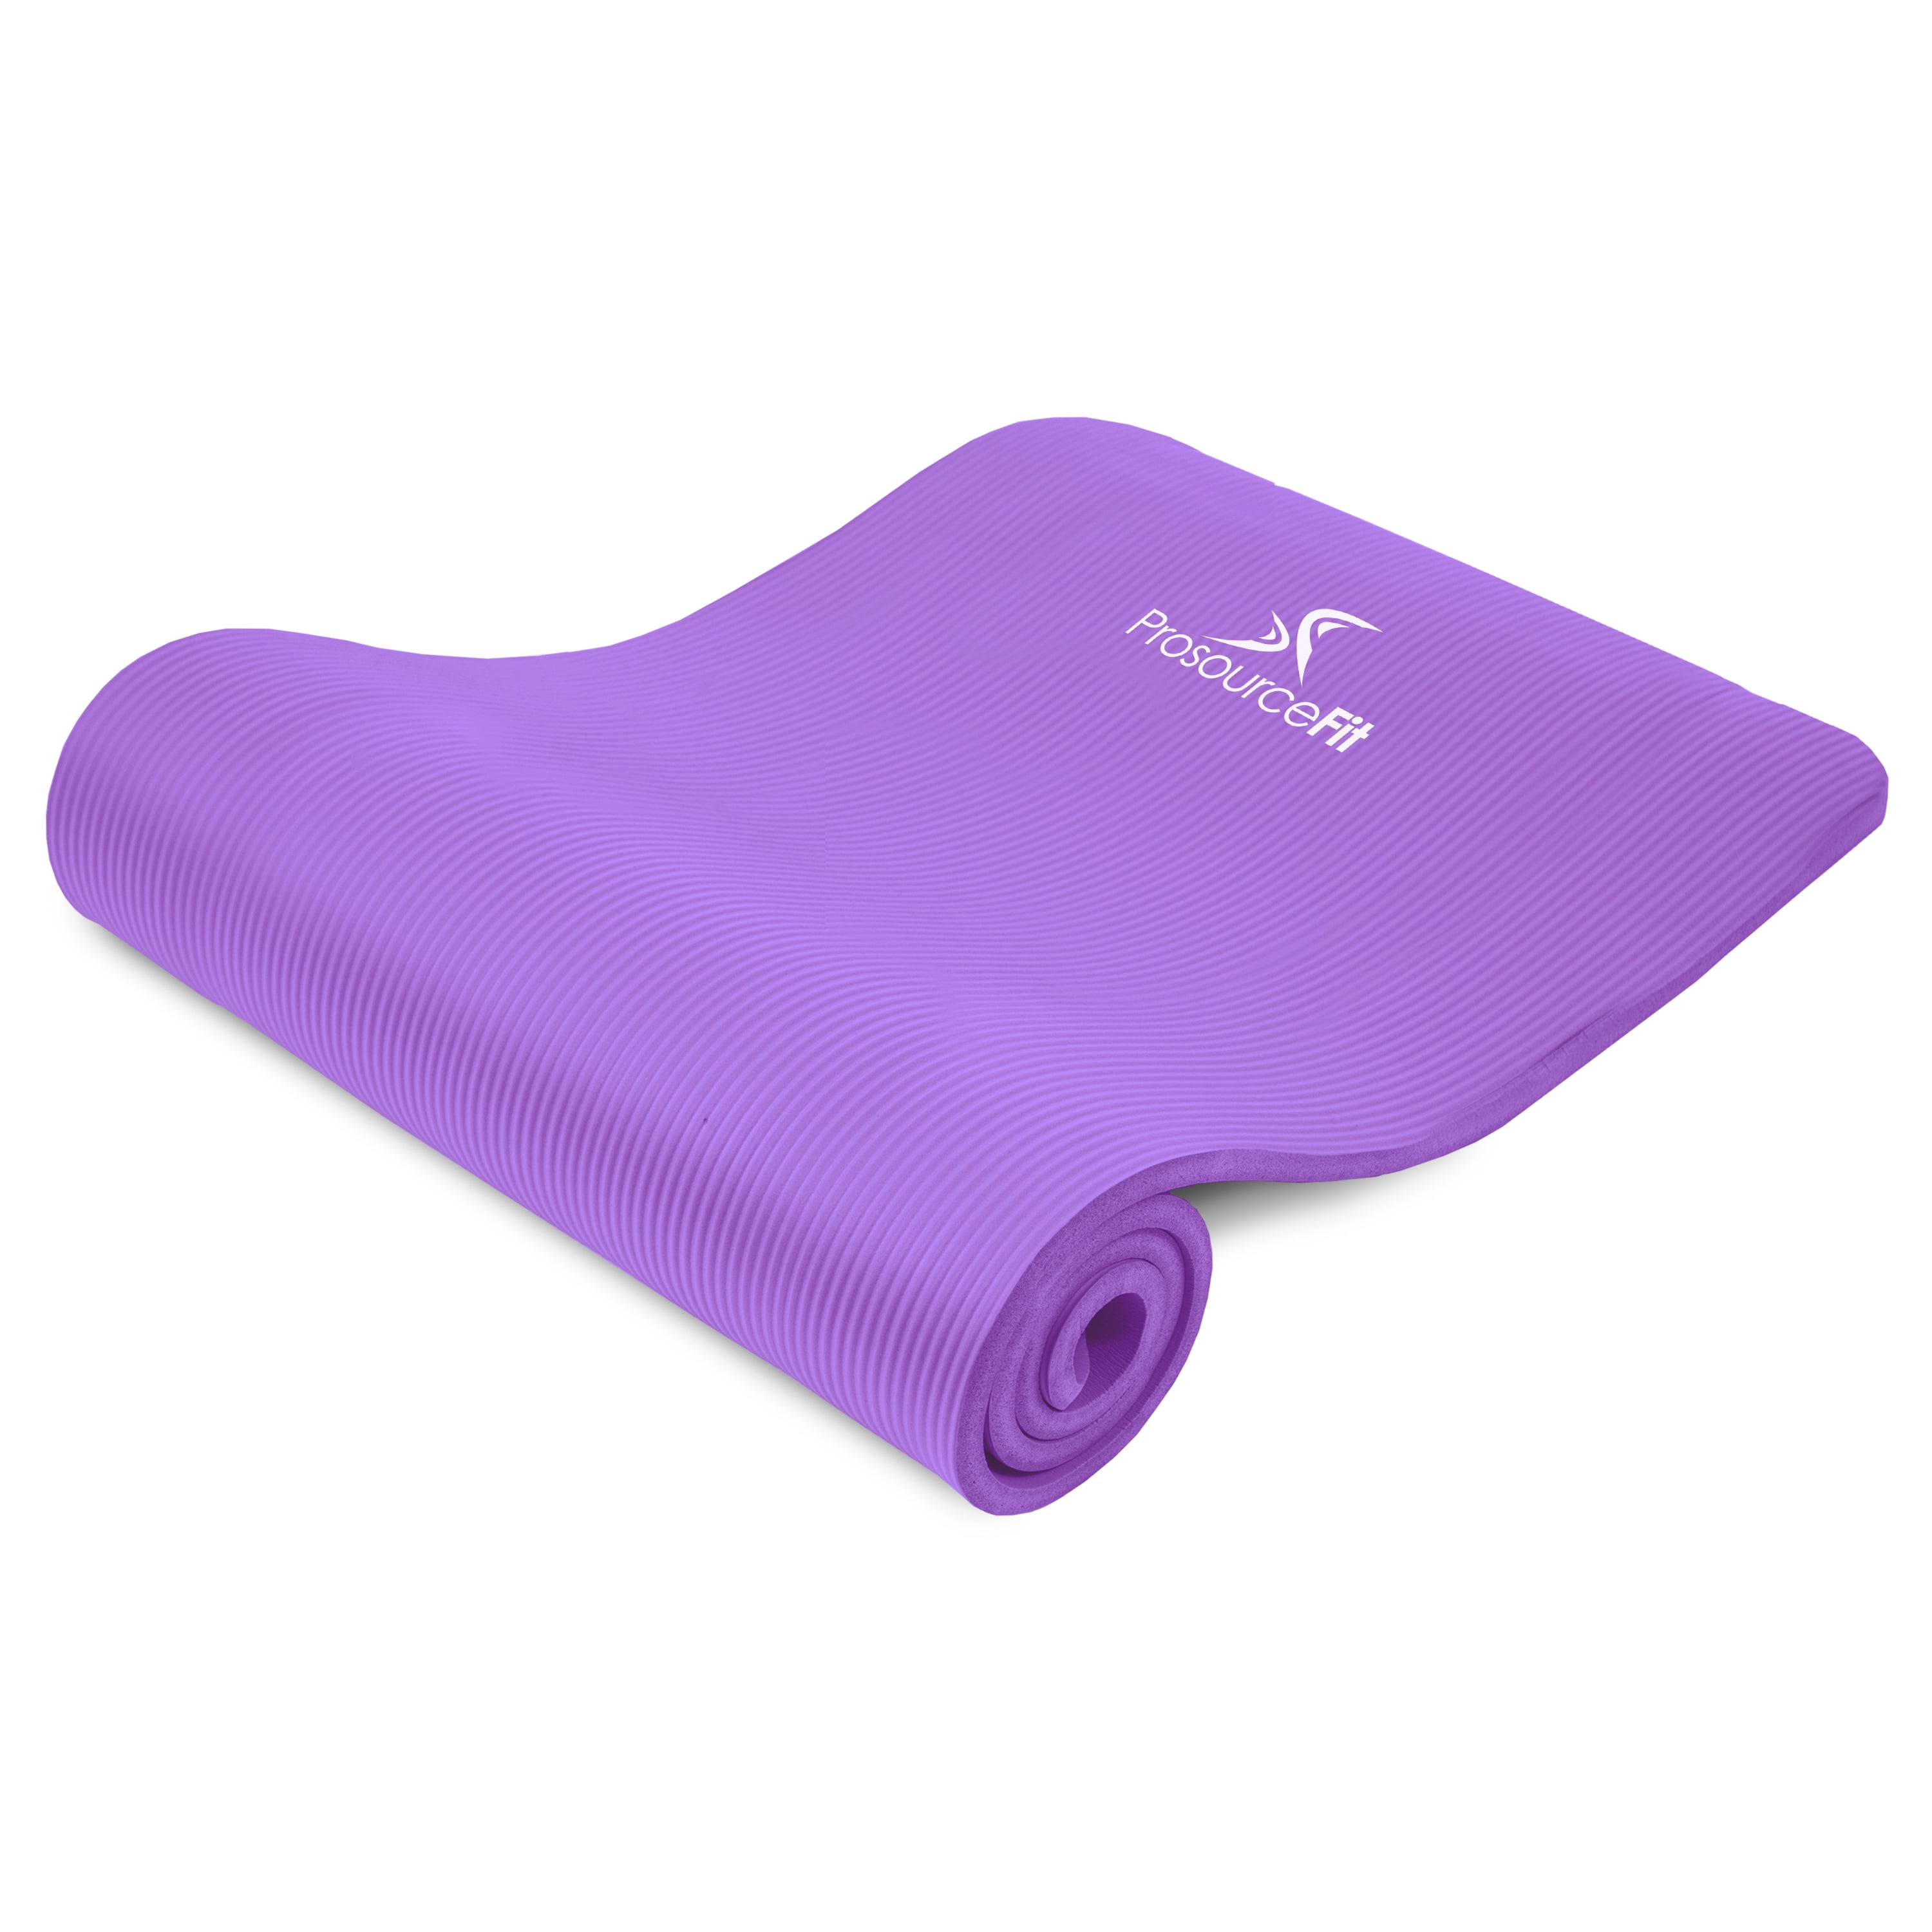 9' x 6' x 8mm Extra Thick & Comfortable Purple Premium Extra Large Yoga Mat 